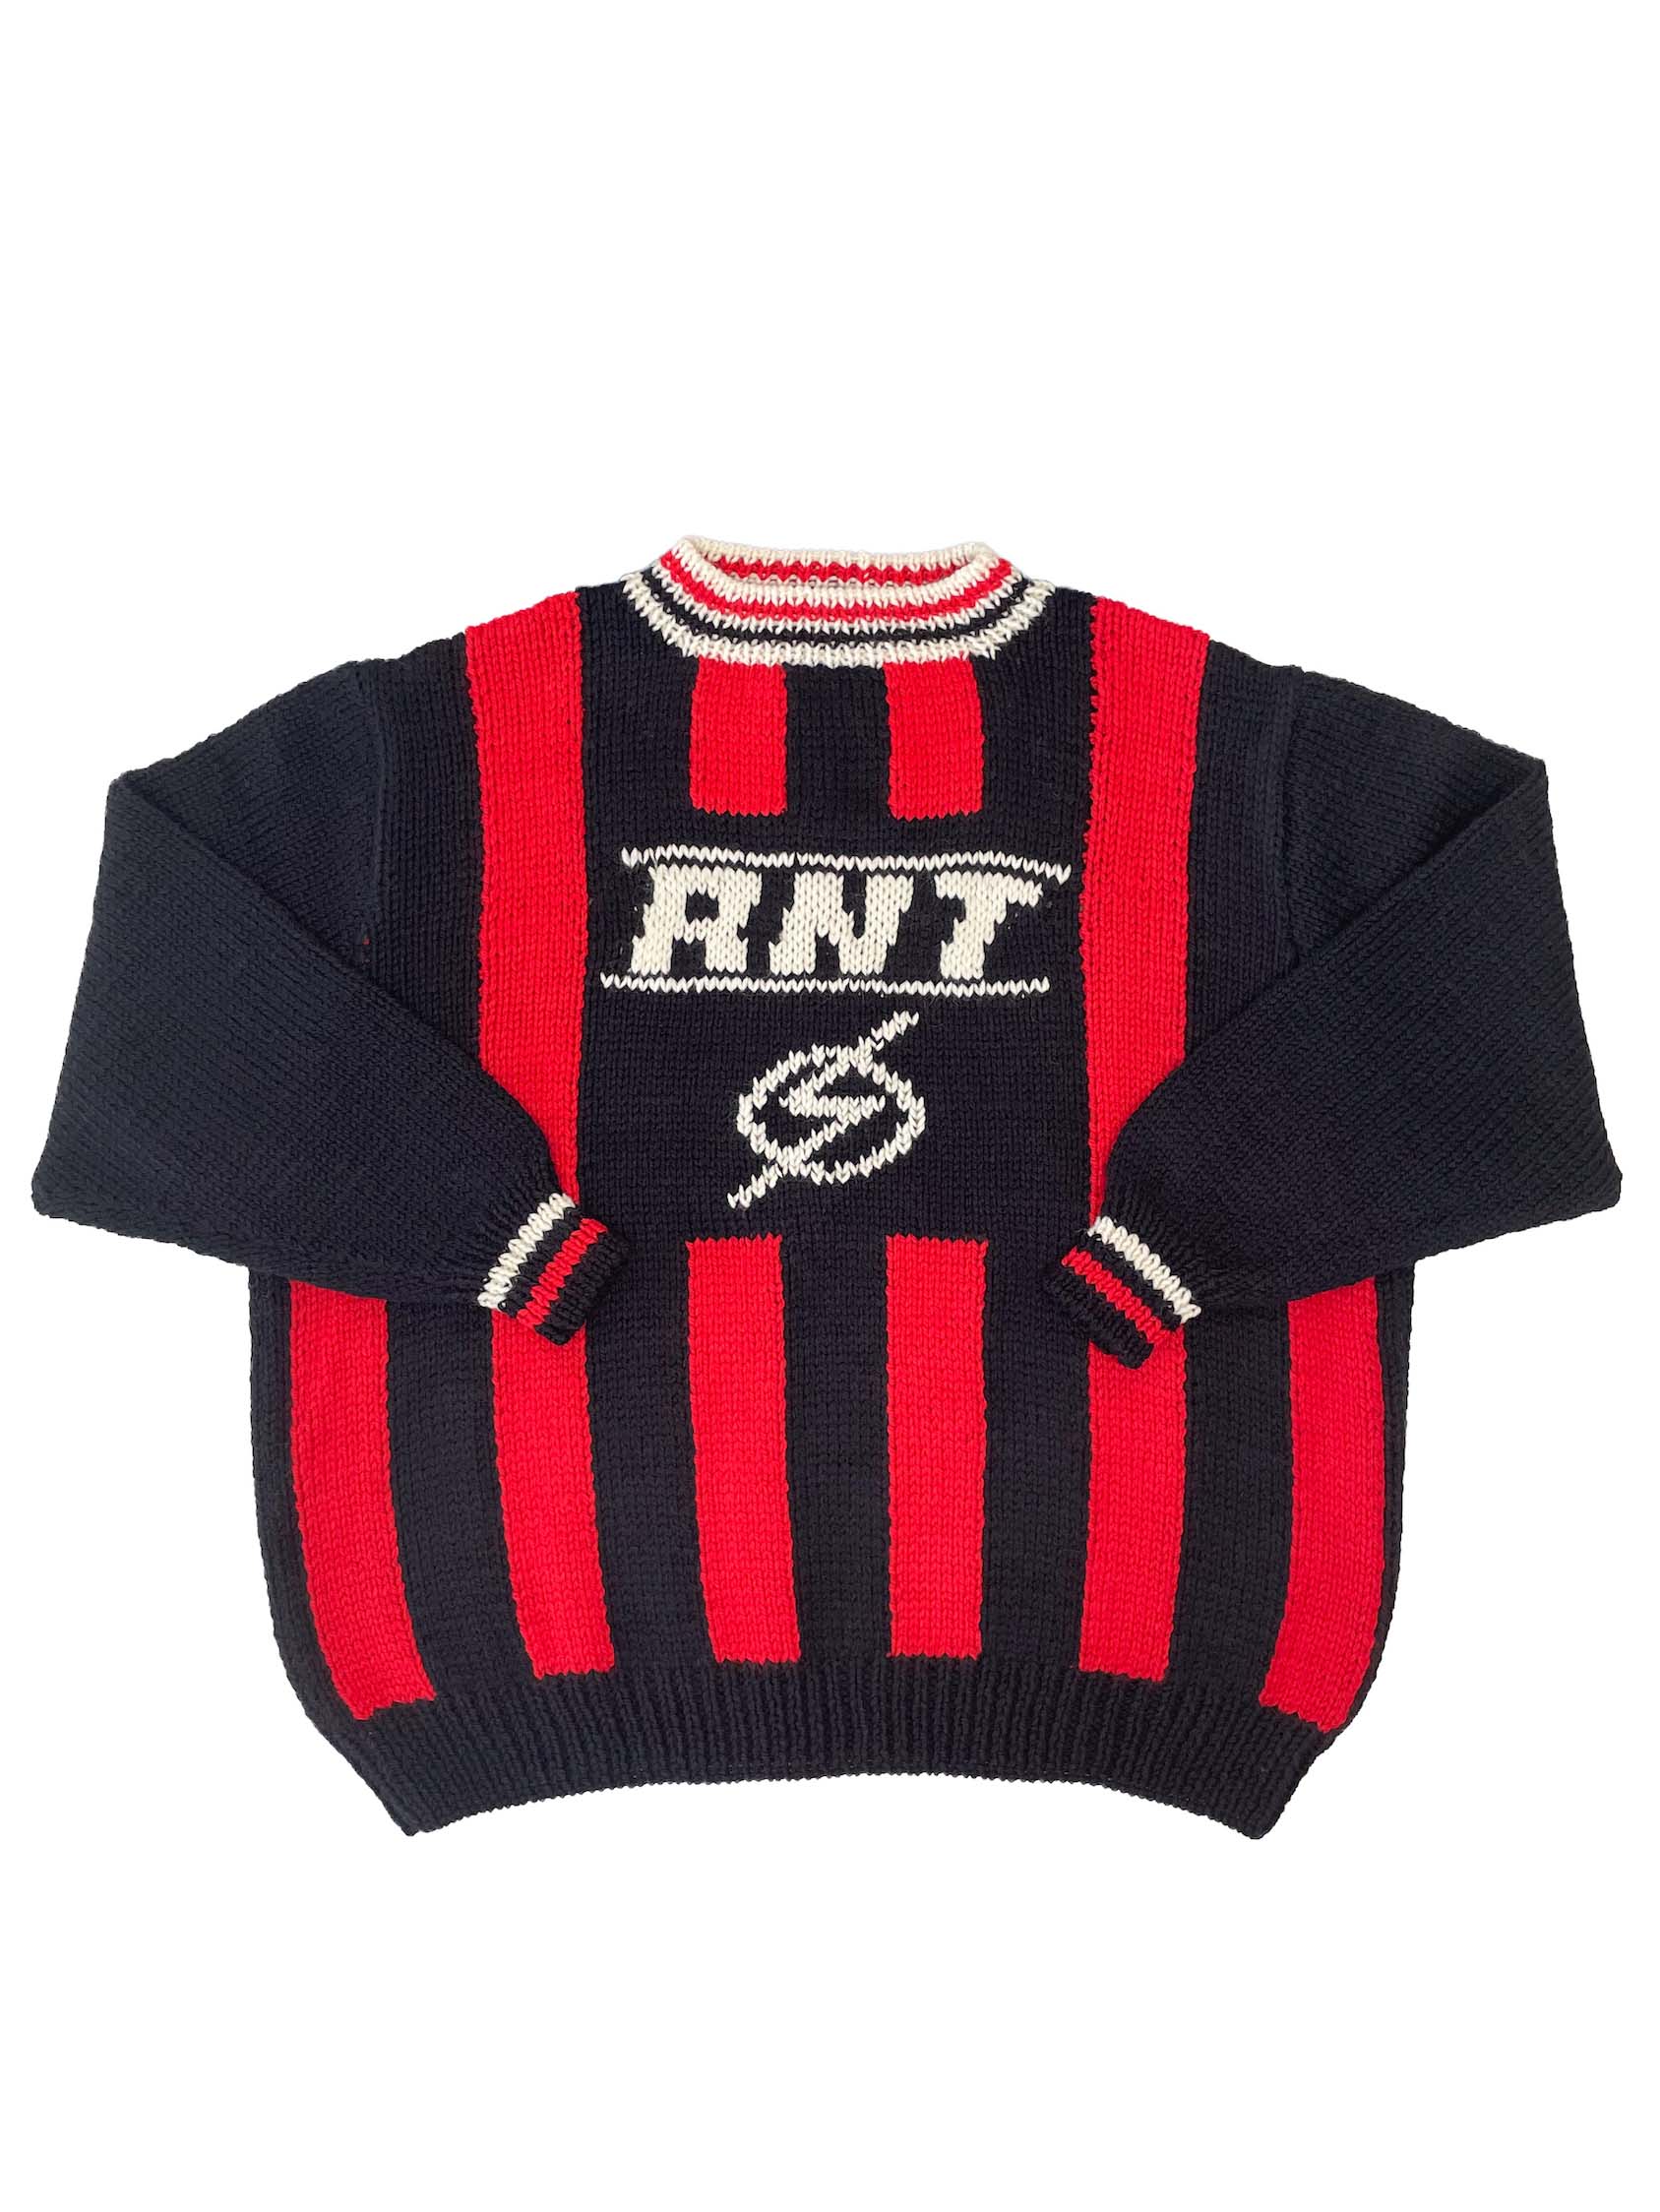 rice nine ten sweater